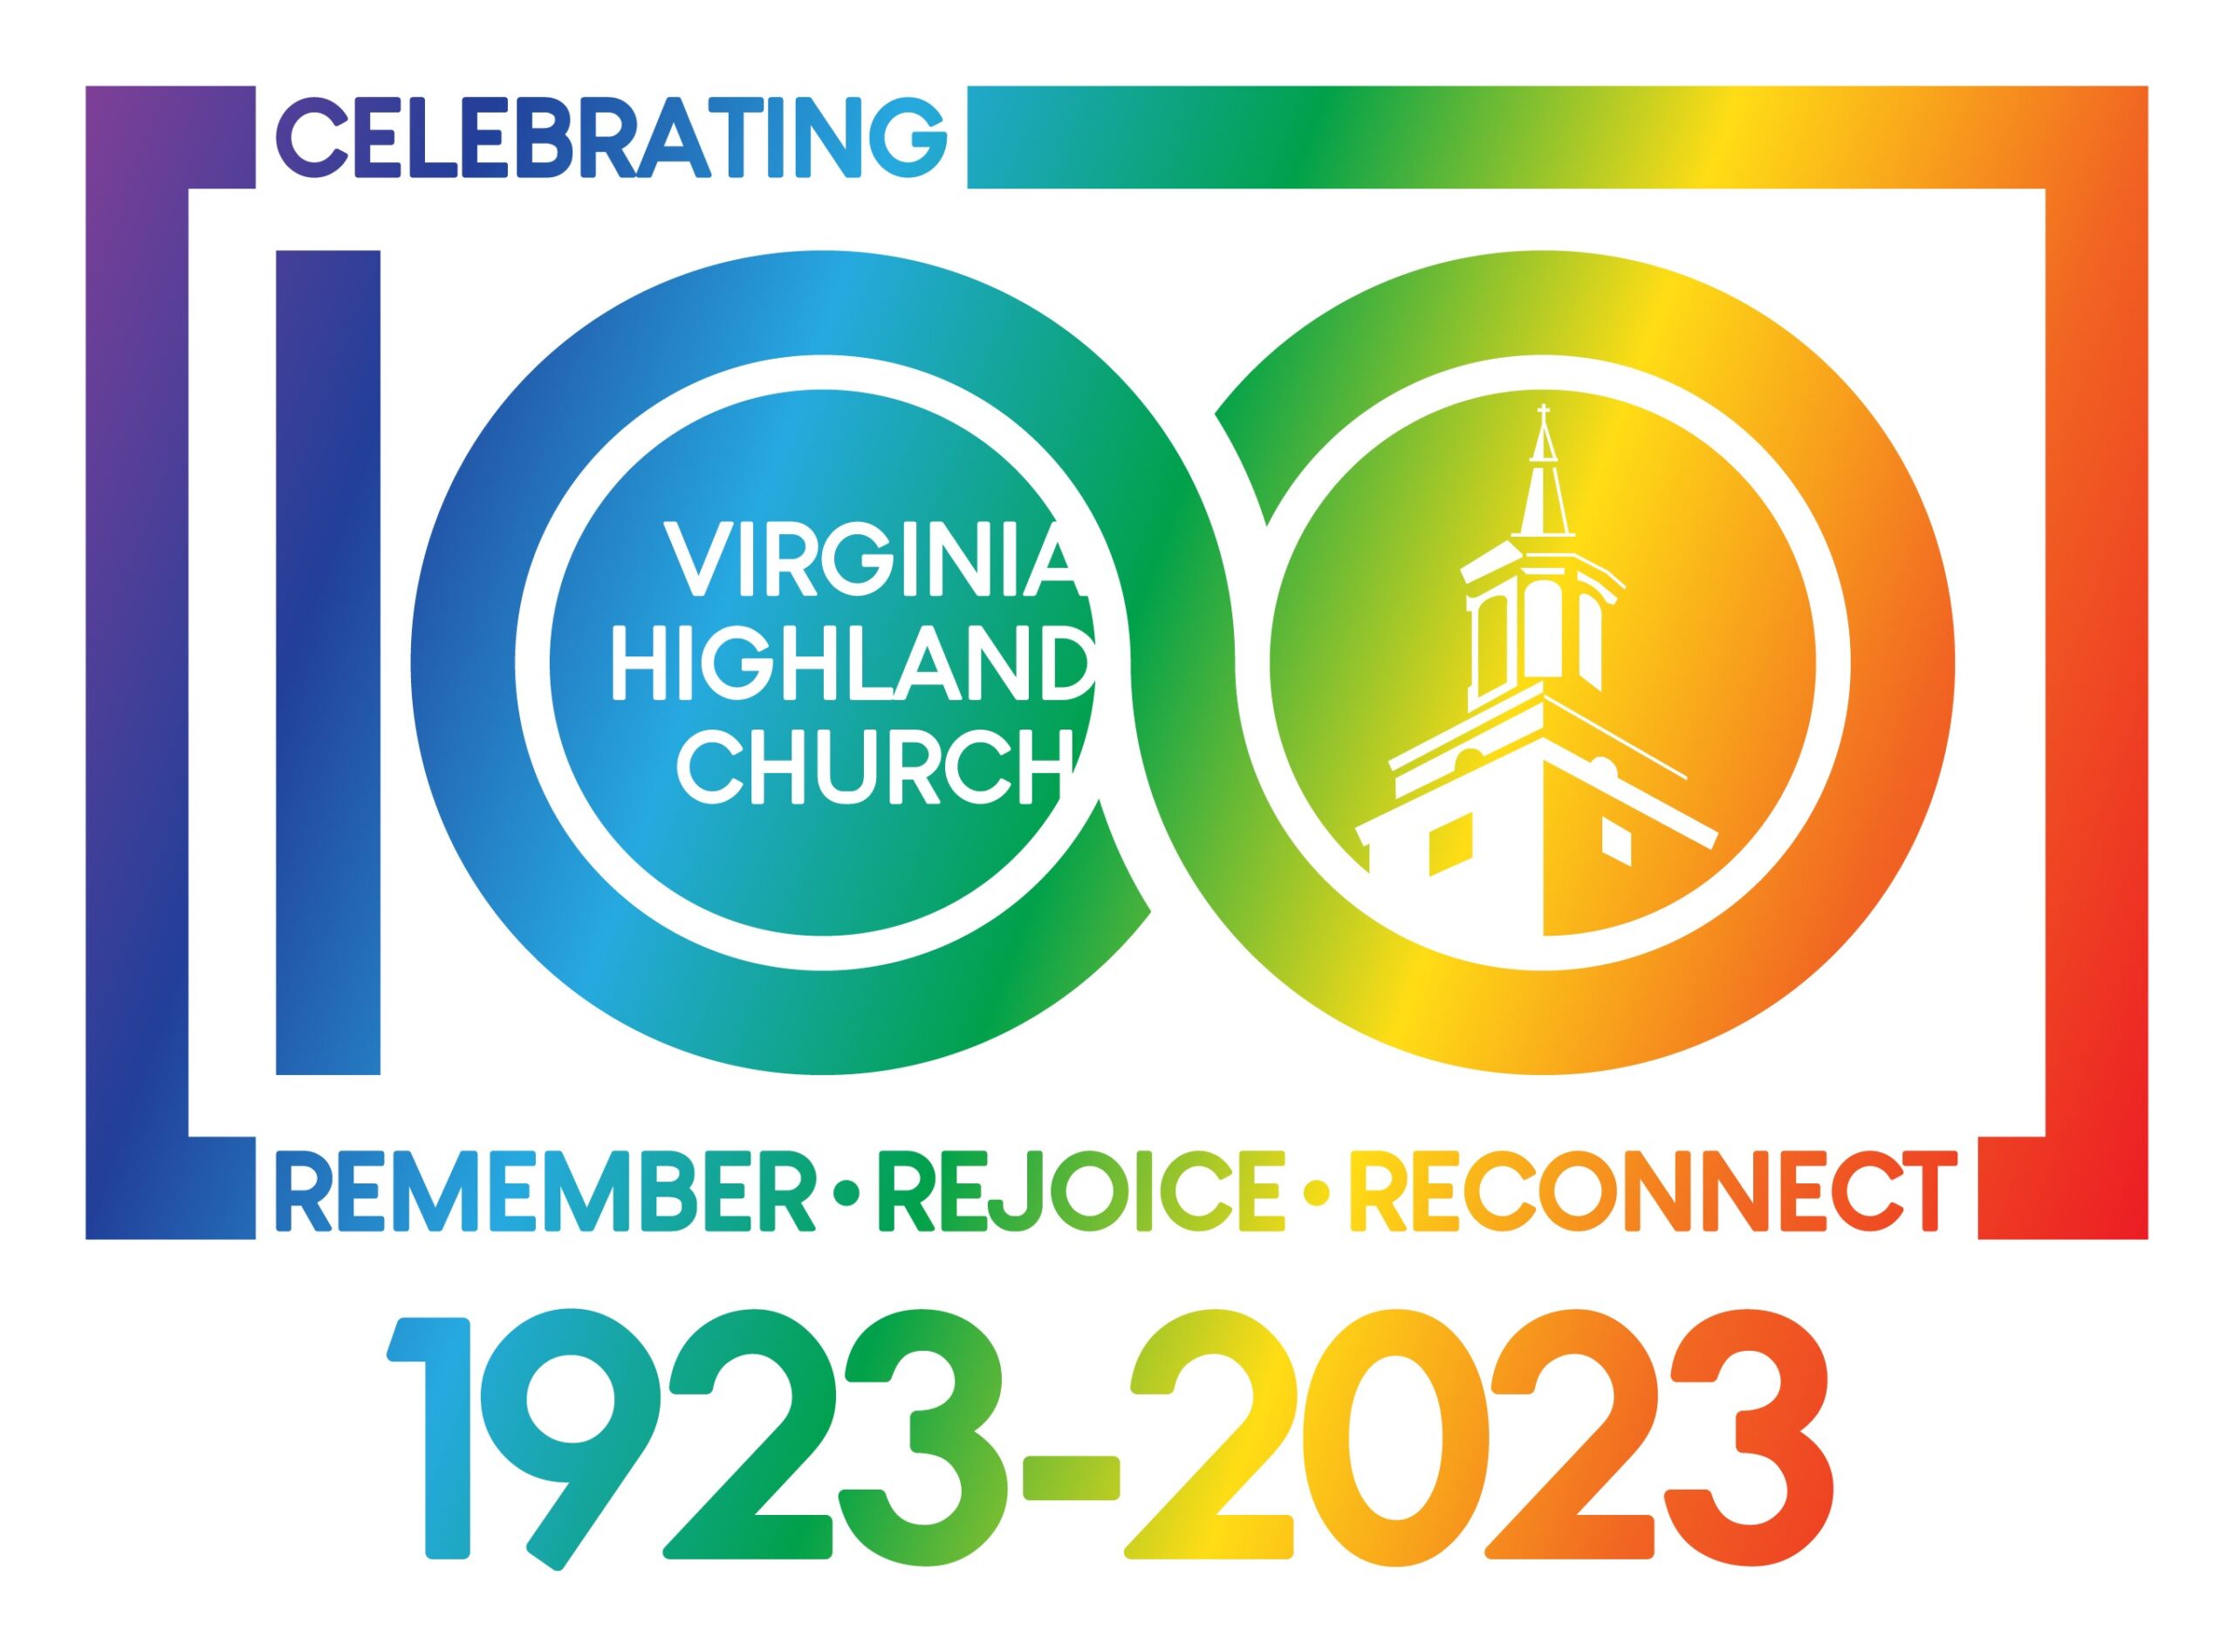 Virginia-Highland Church logo celebrating 100 years of ministry.